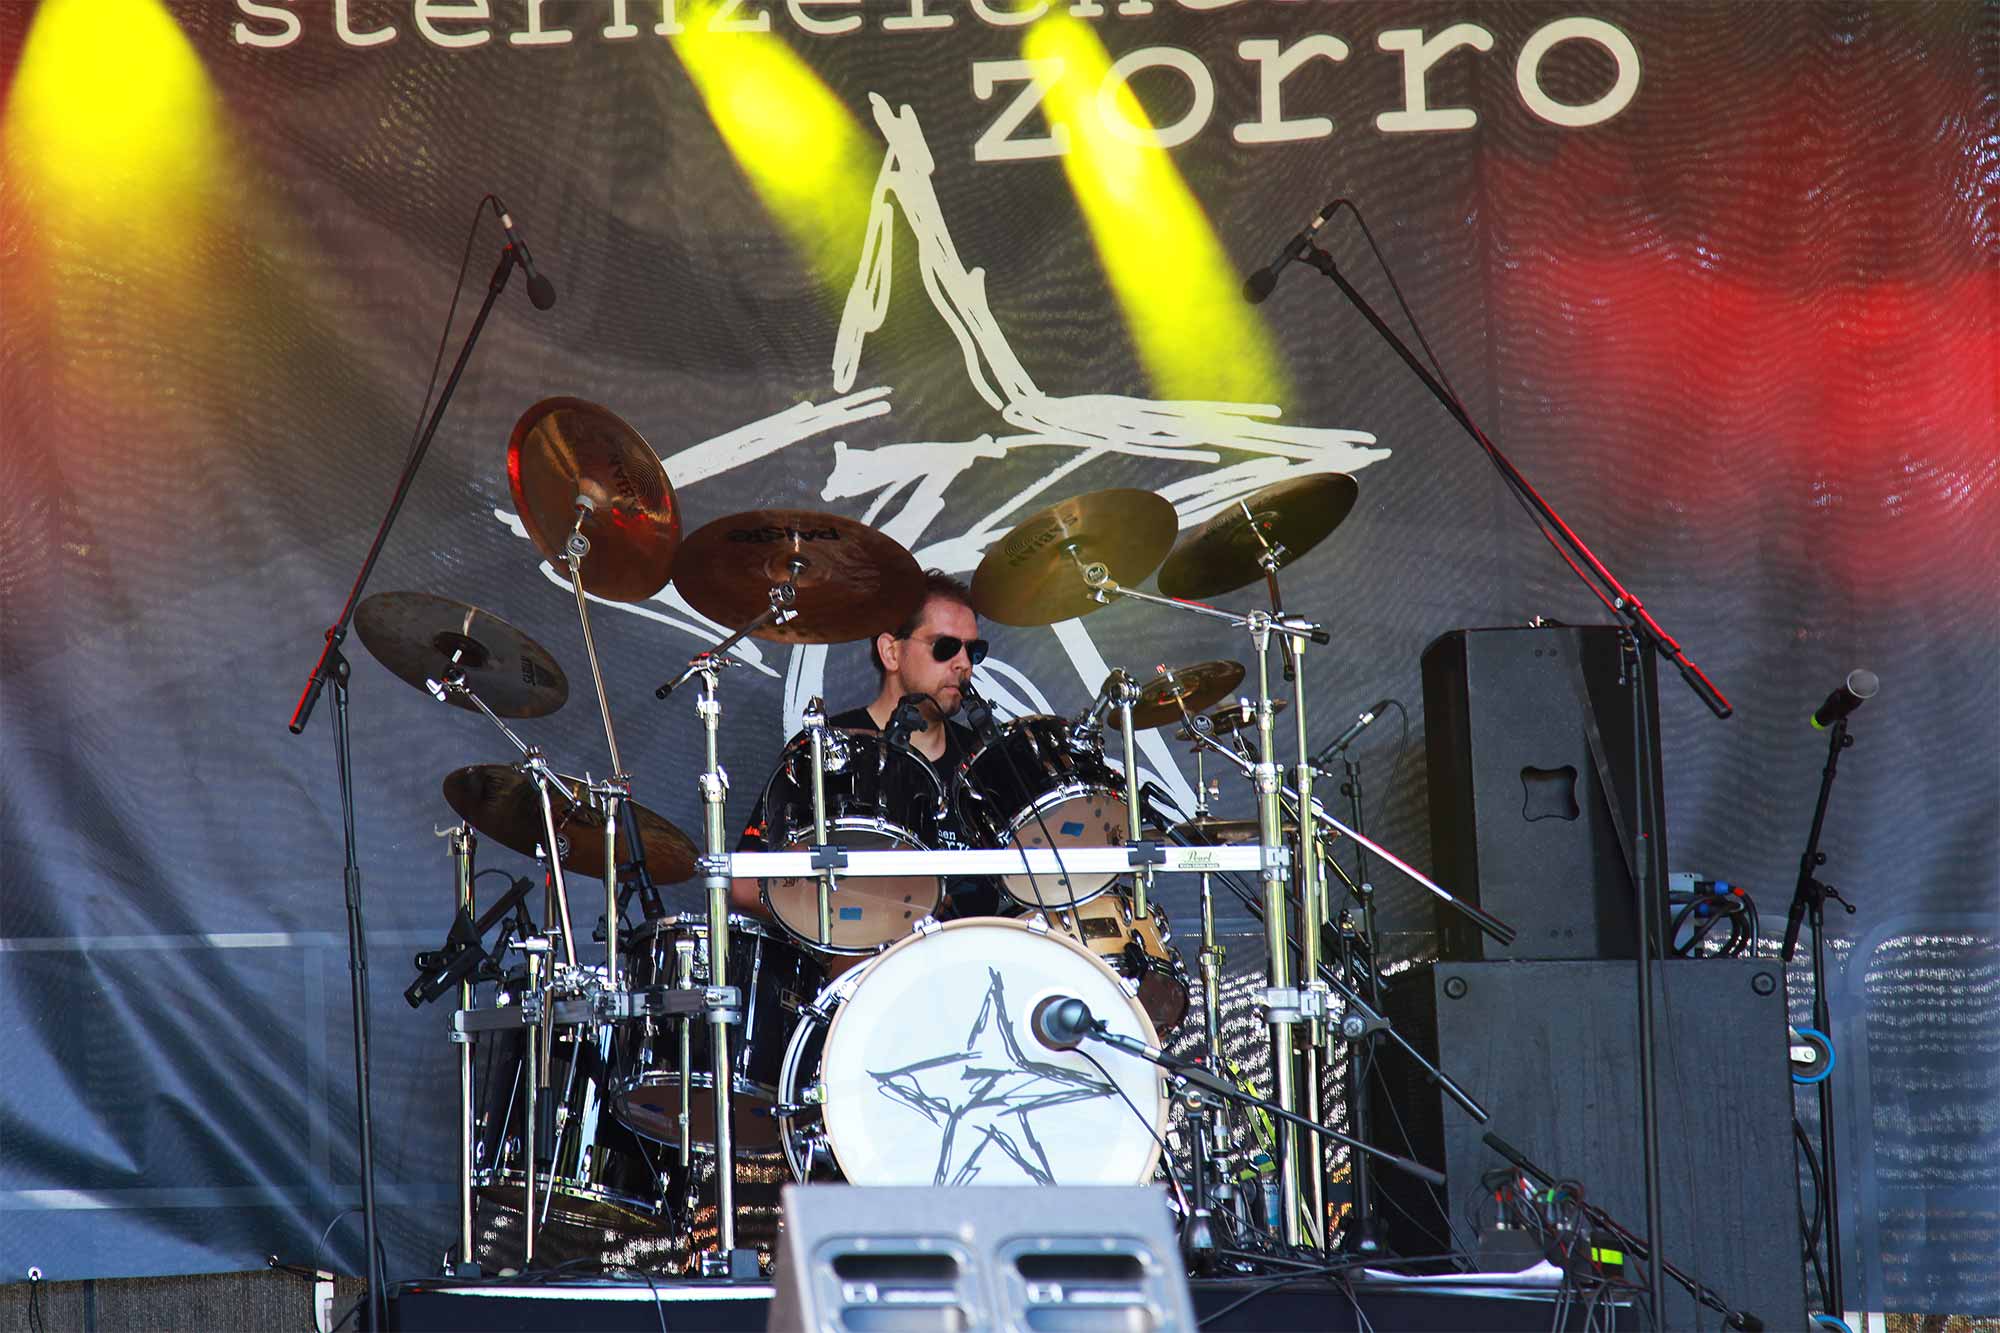 Sternzeichen Zorro - Sebastian Bork, Schlagzeug